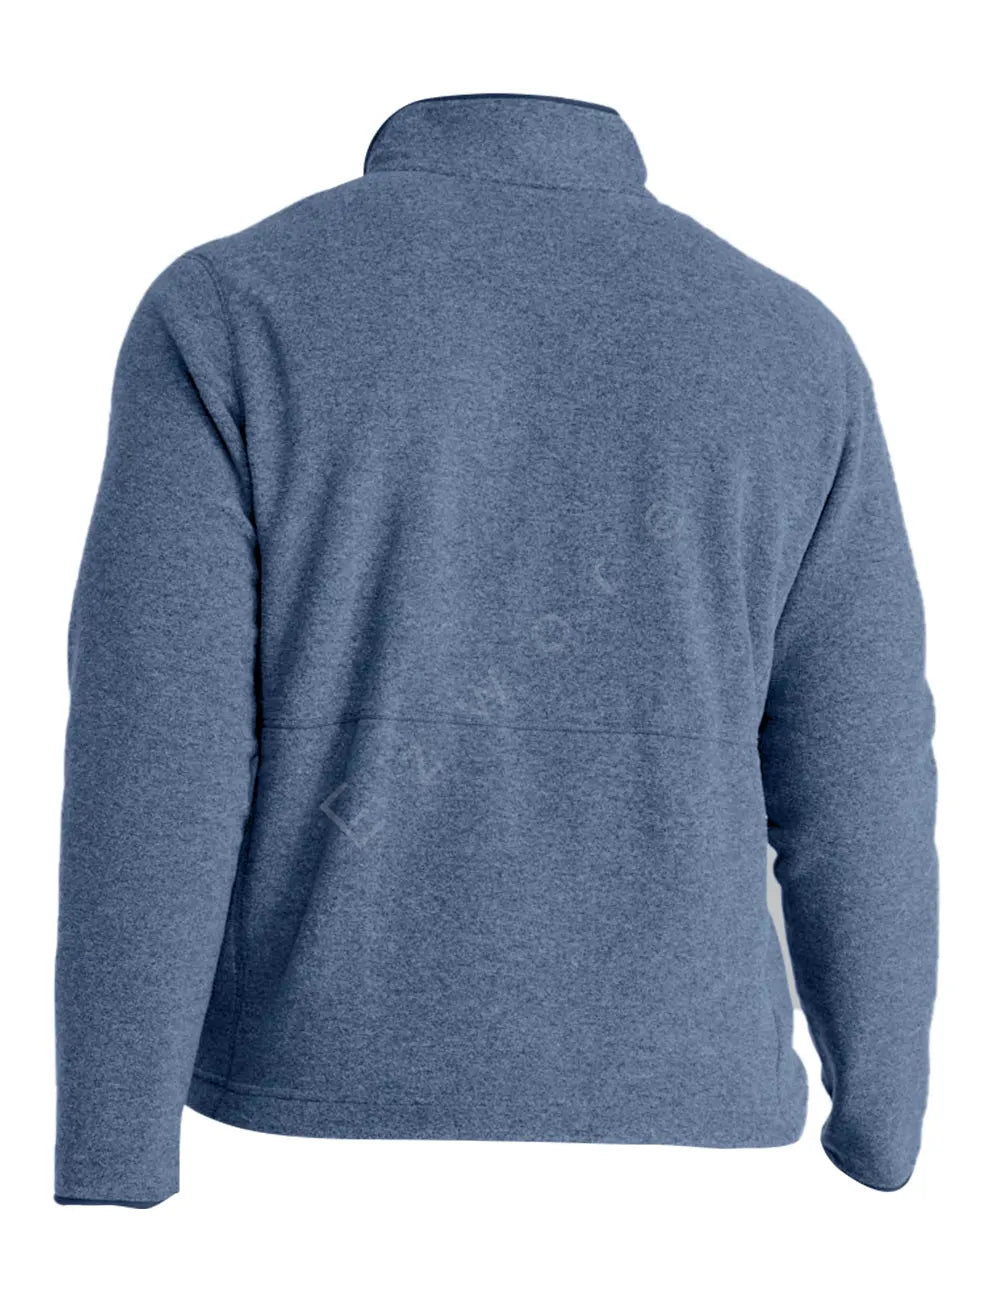 Men's Mountain Classic Blue Fleece Jacket